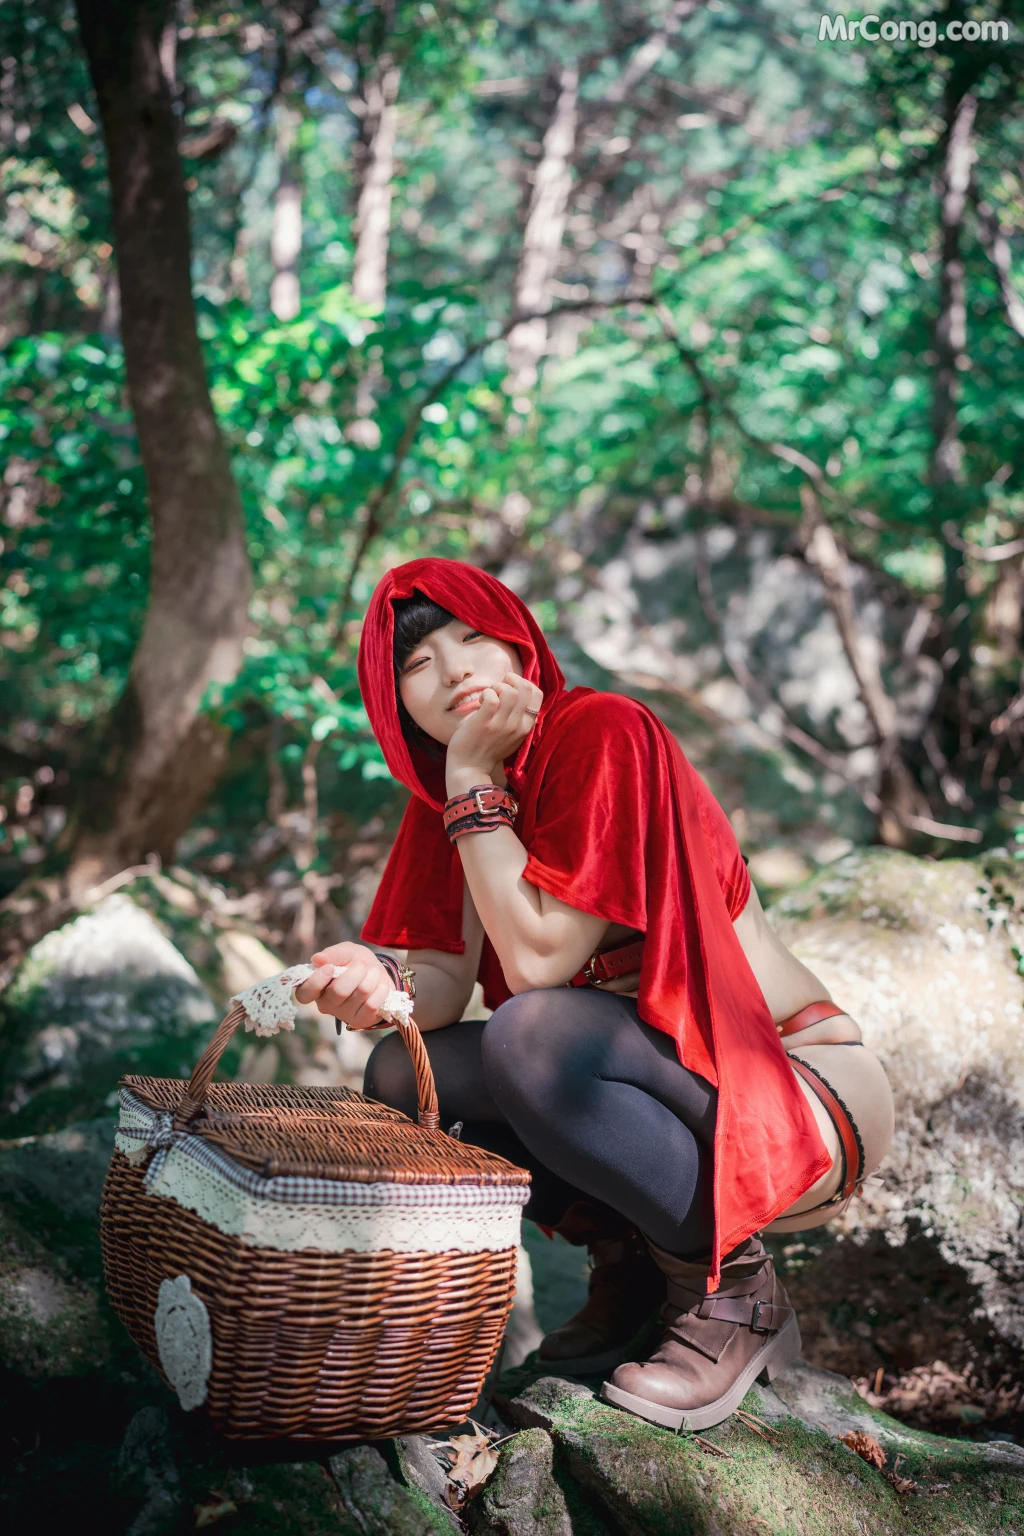 DJAWA Photo - Mimmi (밈미): "Naughty Red Hiring Hood" (125 photos) photo 3-1